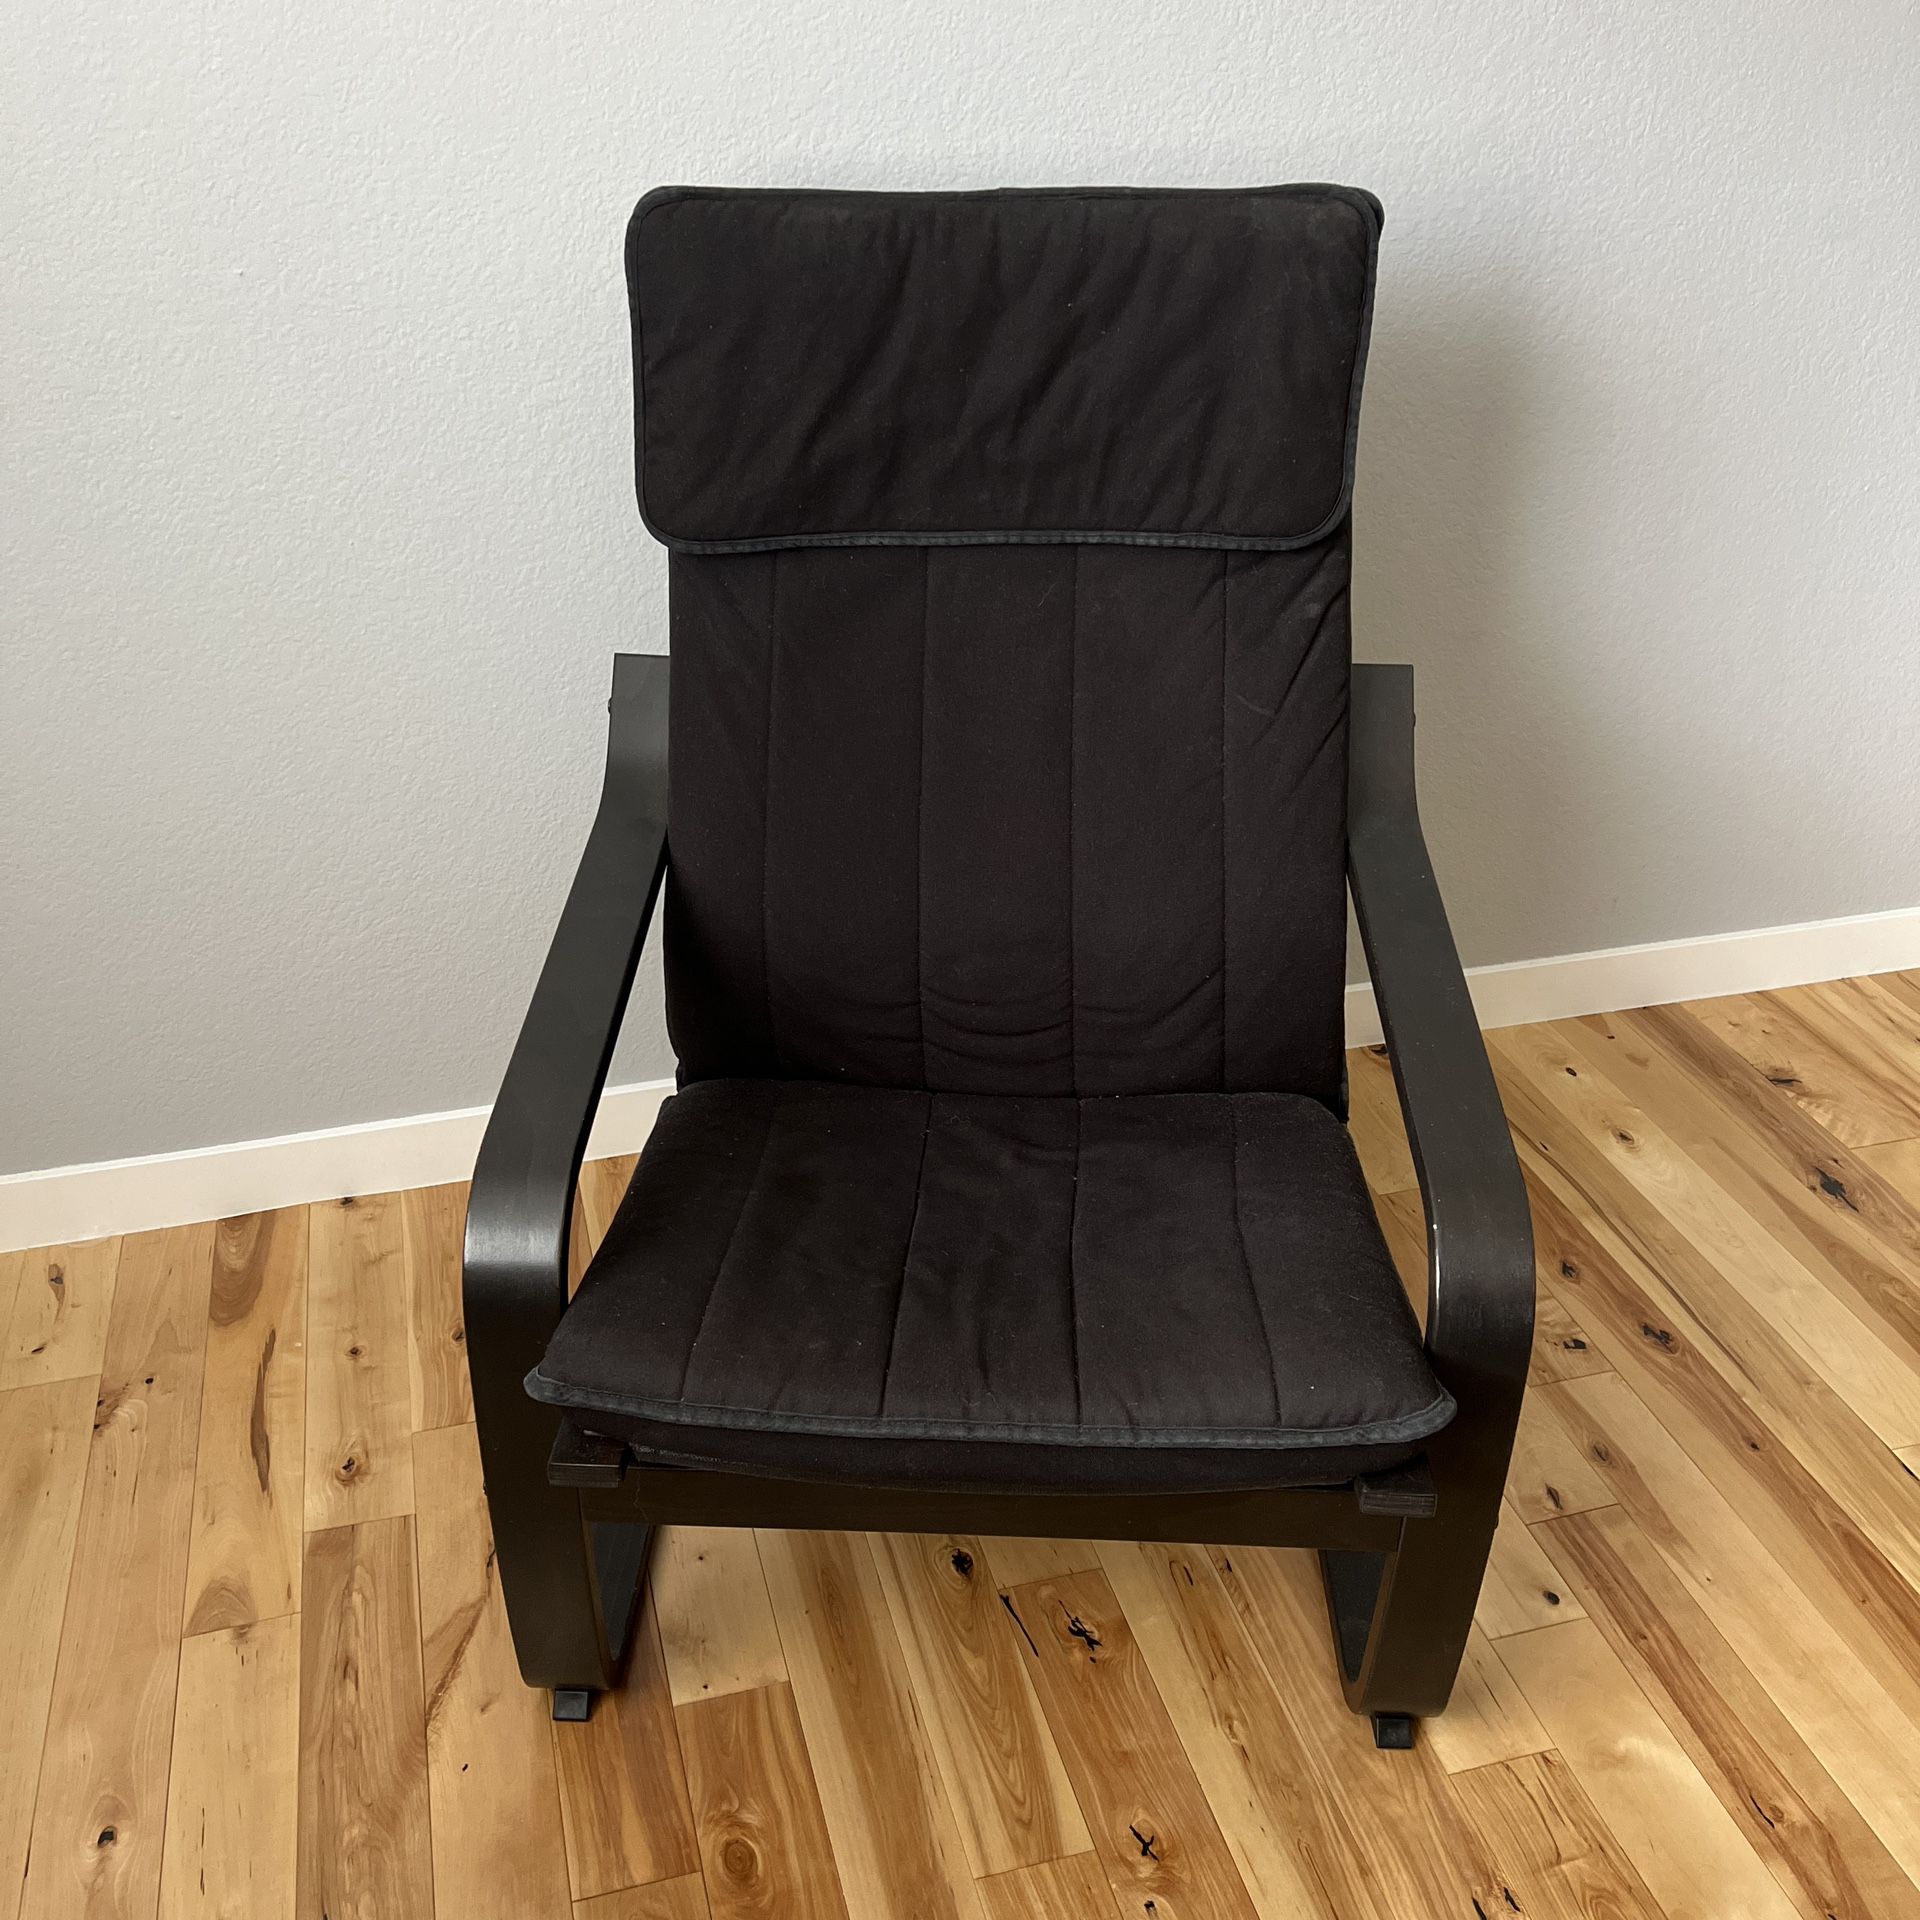 Ikea Pöang Armchair in Black